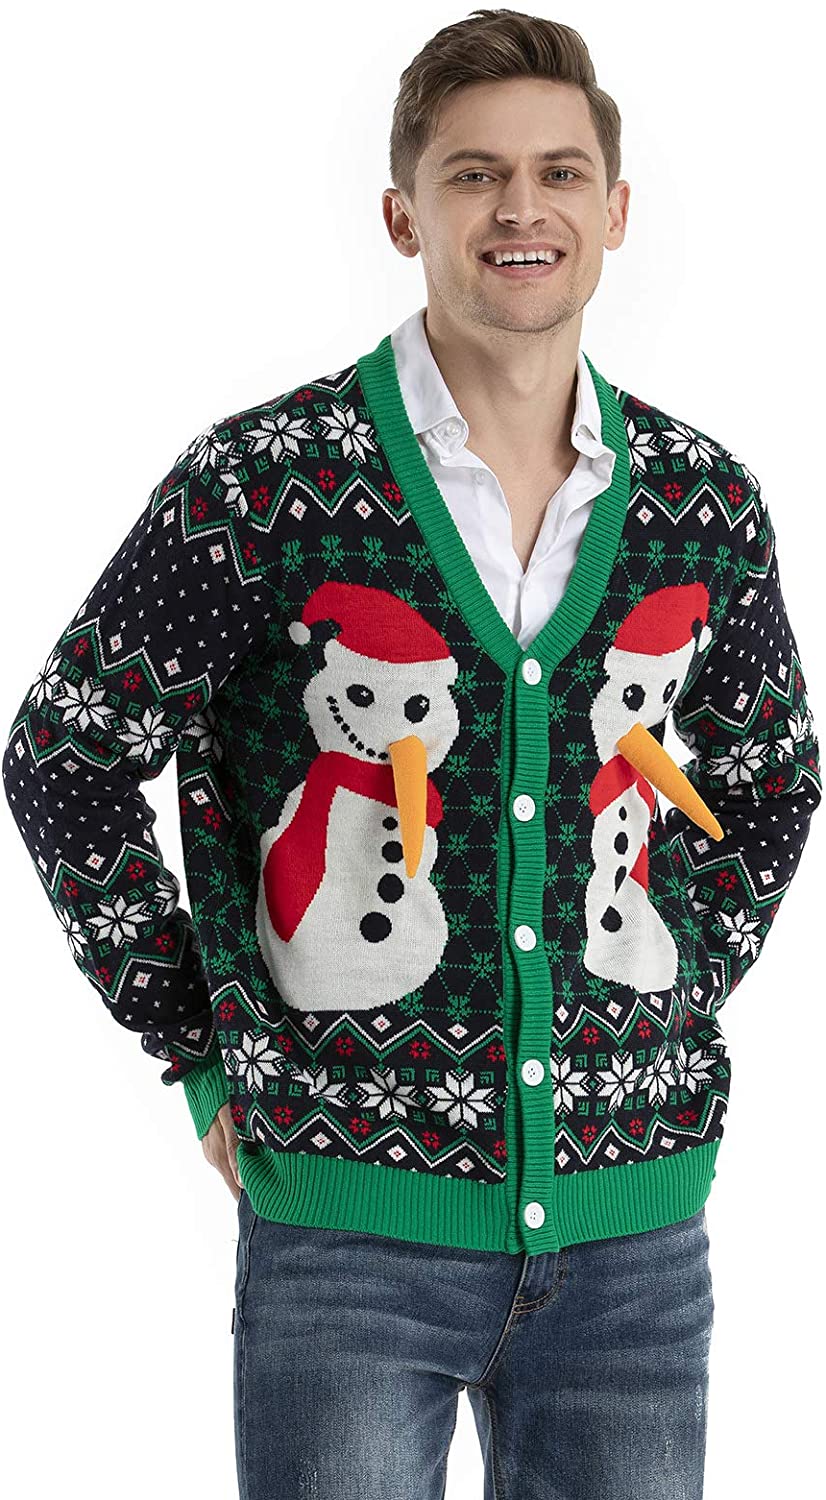 Unisex Men's Ugly Christmas Sweater Funny Christmas Holiday Sweater Novelty  Knit | eBay